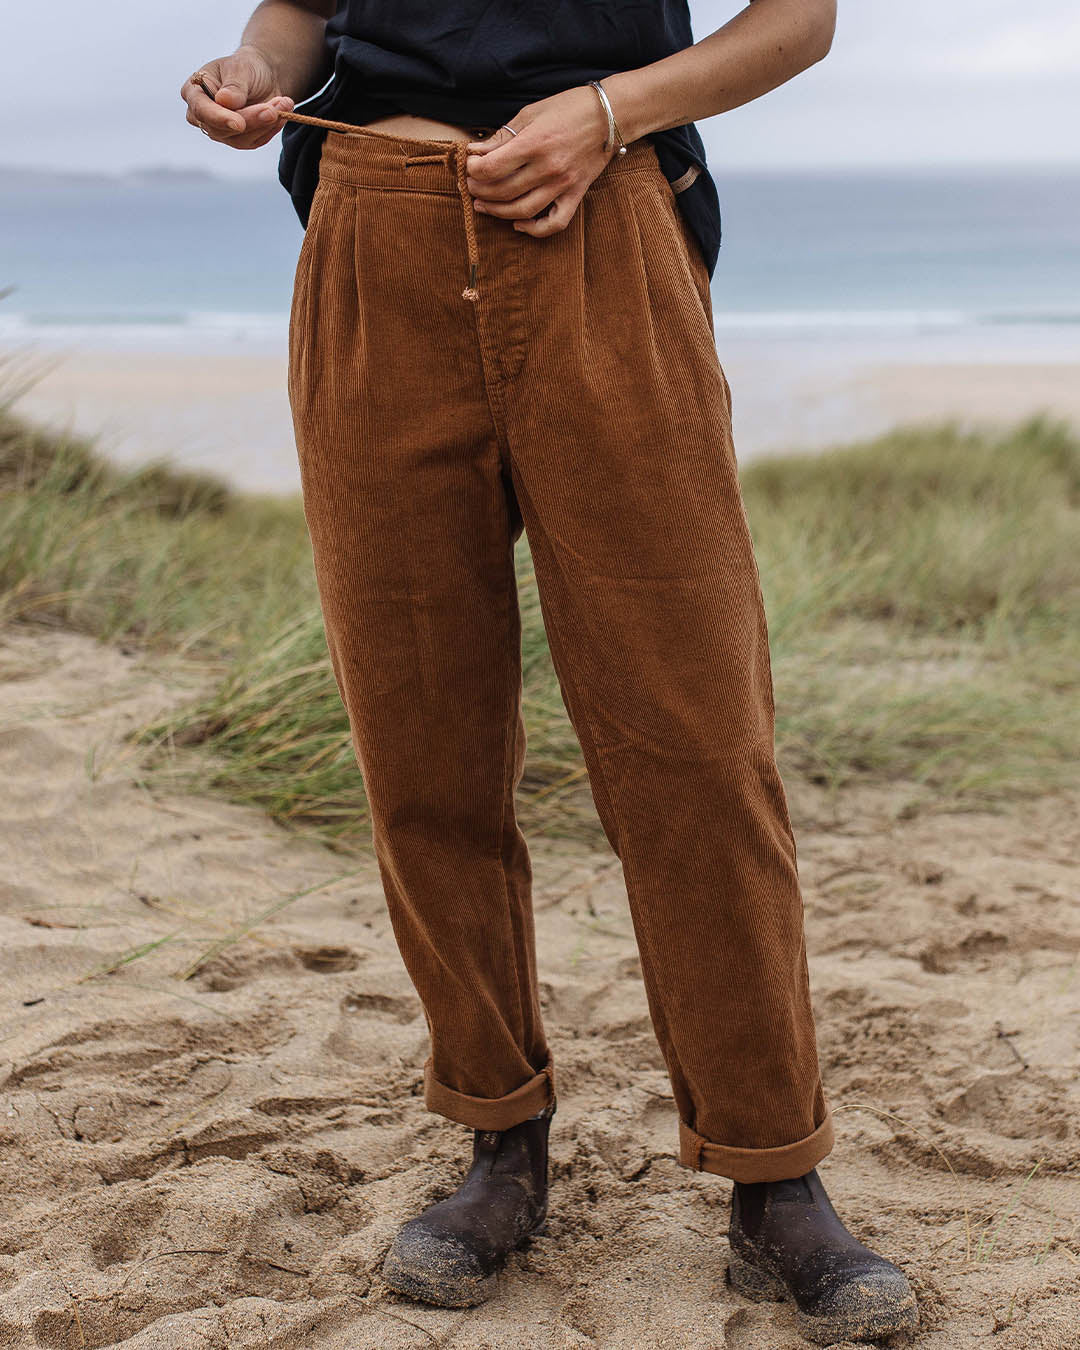 Women's Corduroy Pants Slacks Retro Style, Loose Relaxed Fit Pants